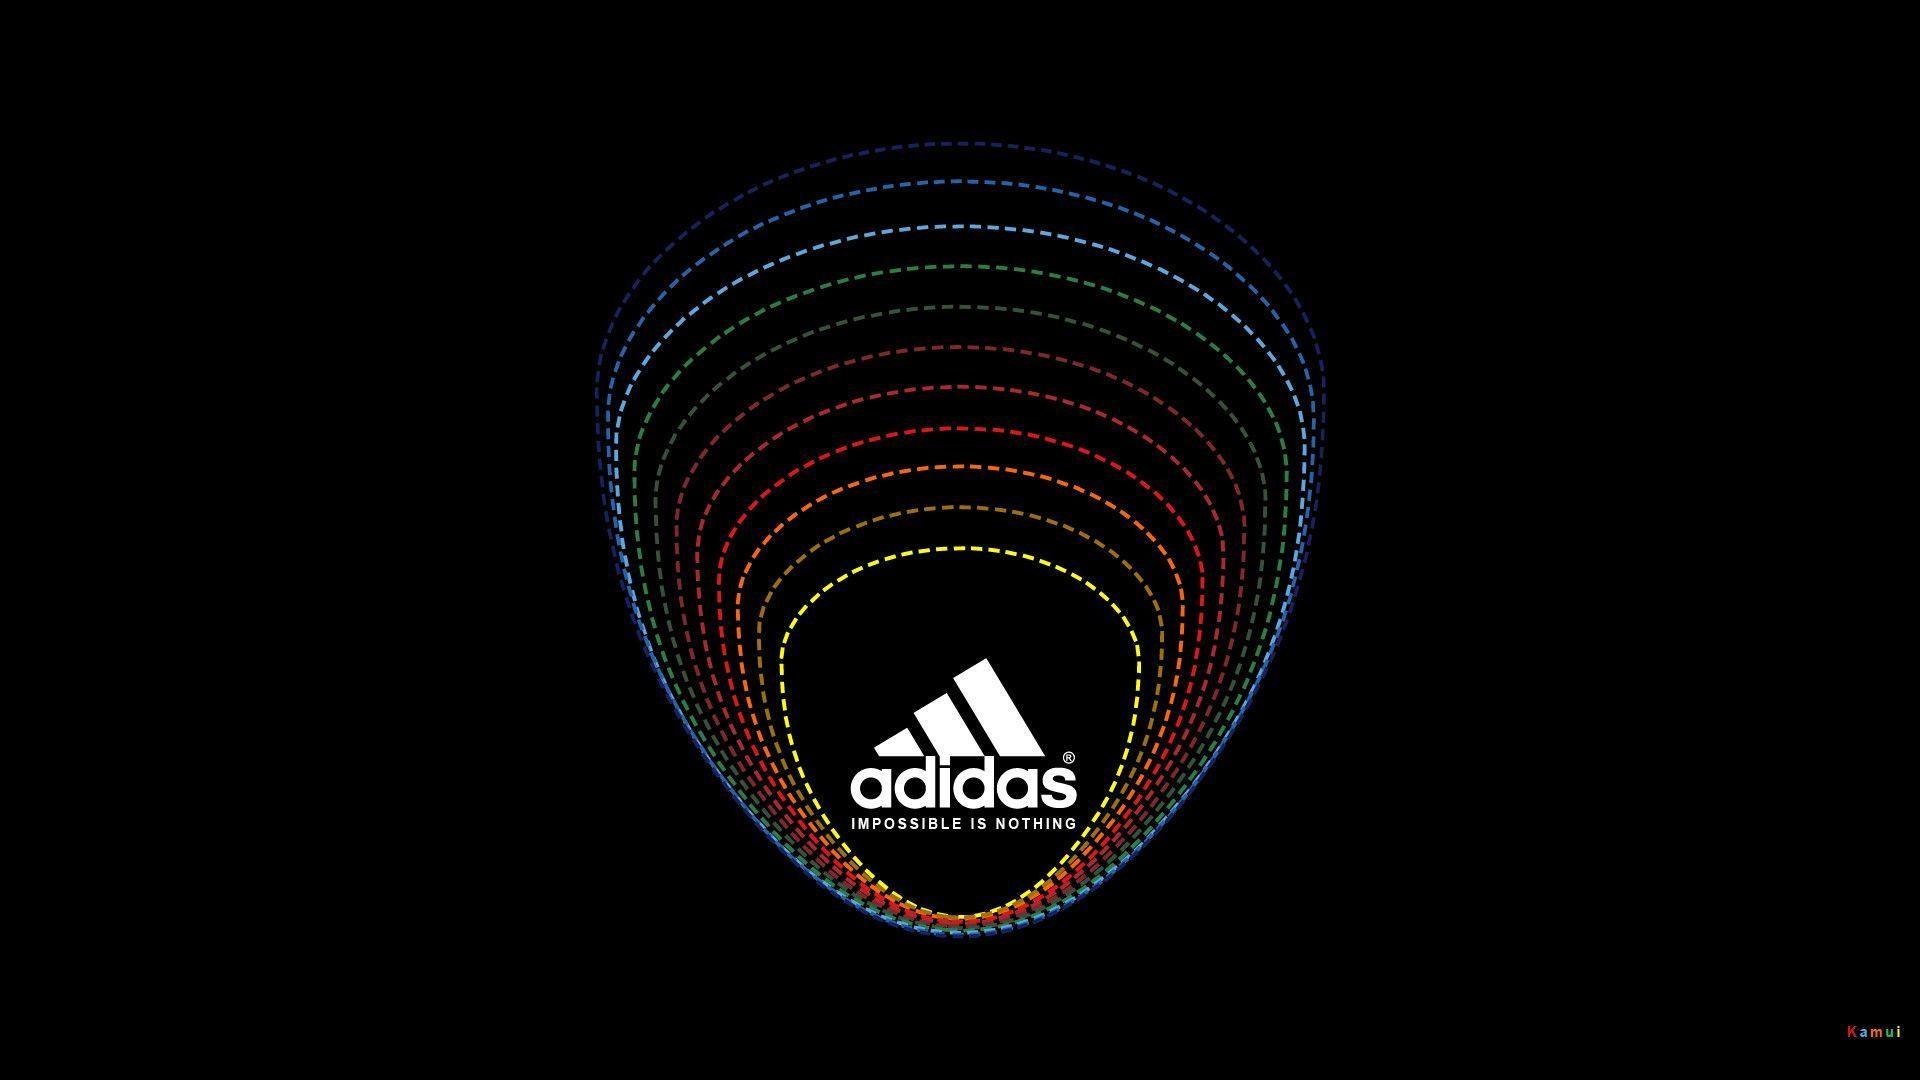 Adidas Original Wallpaper